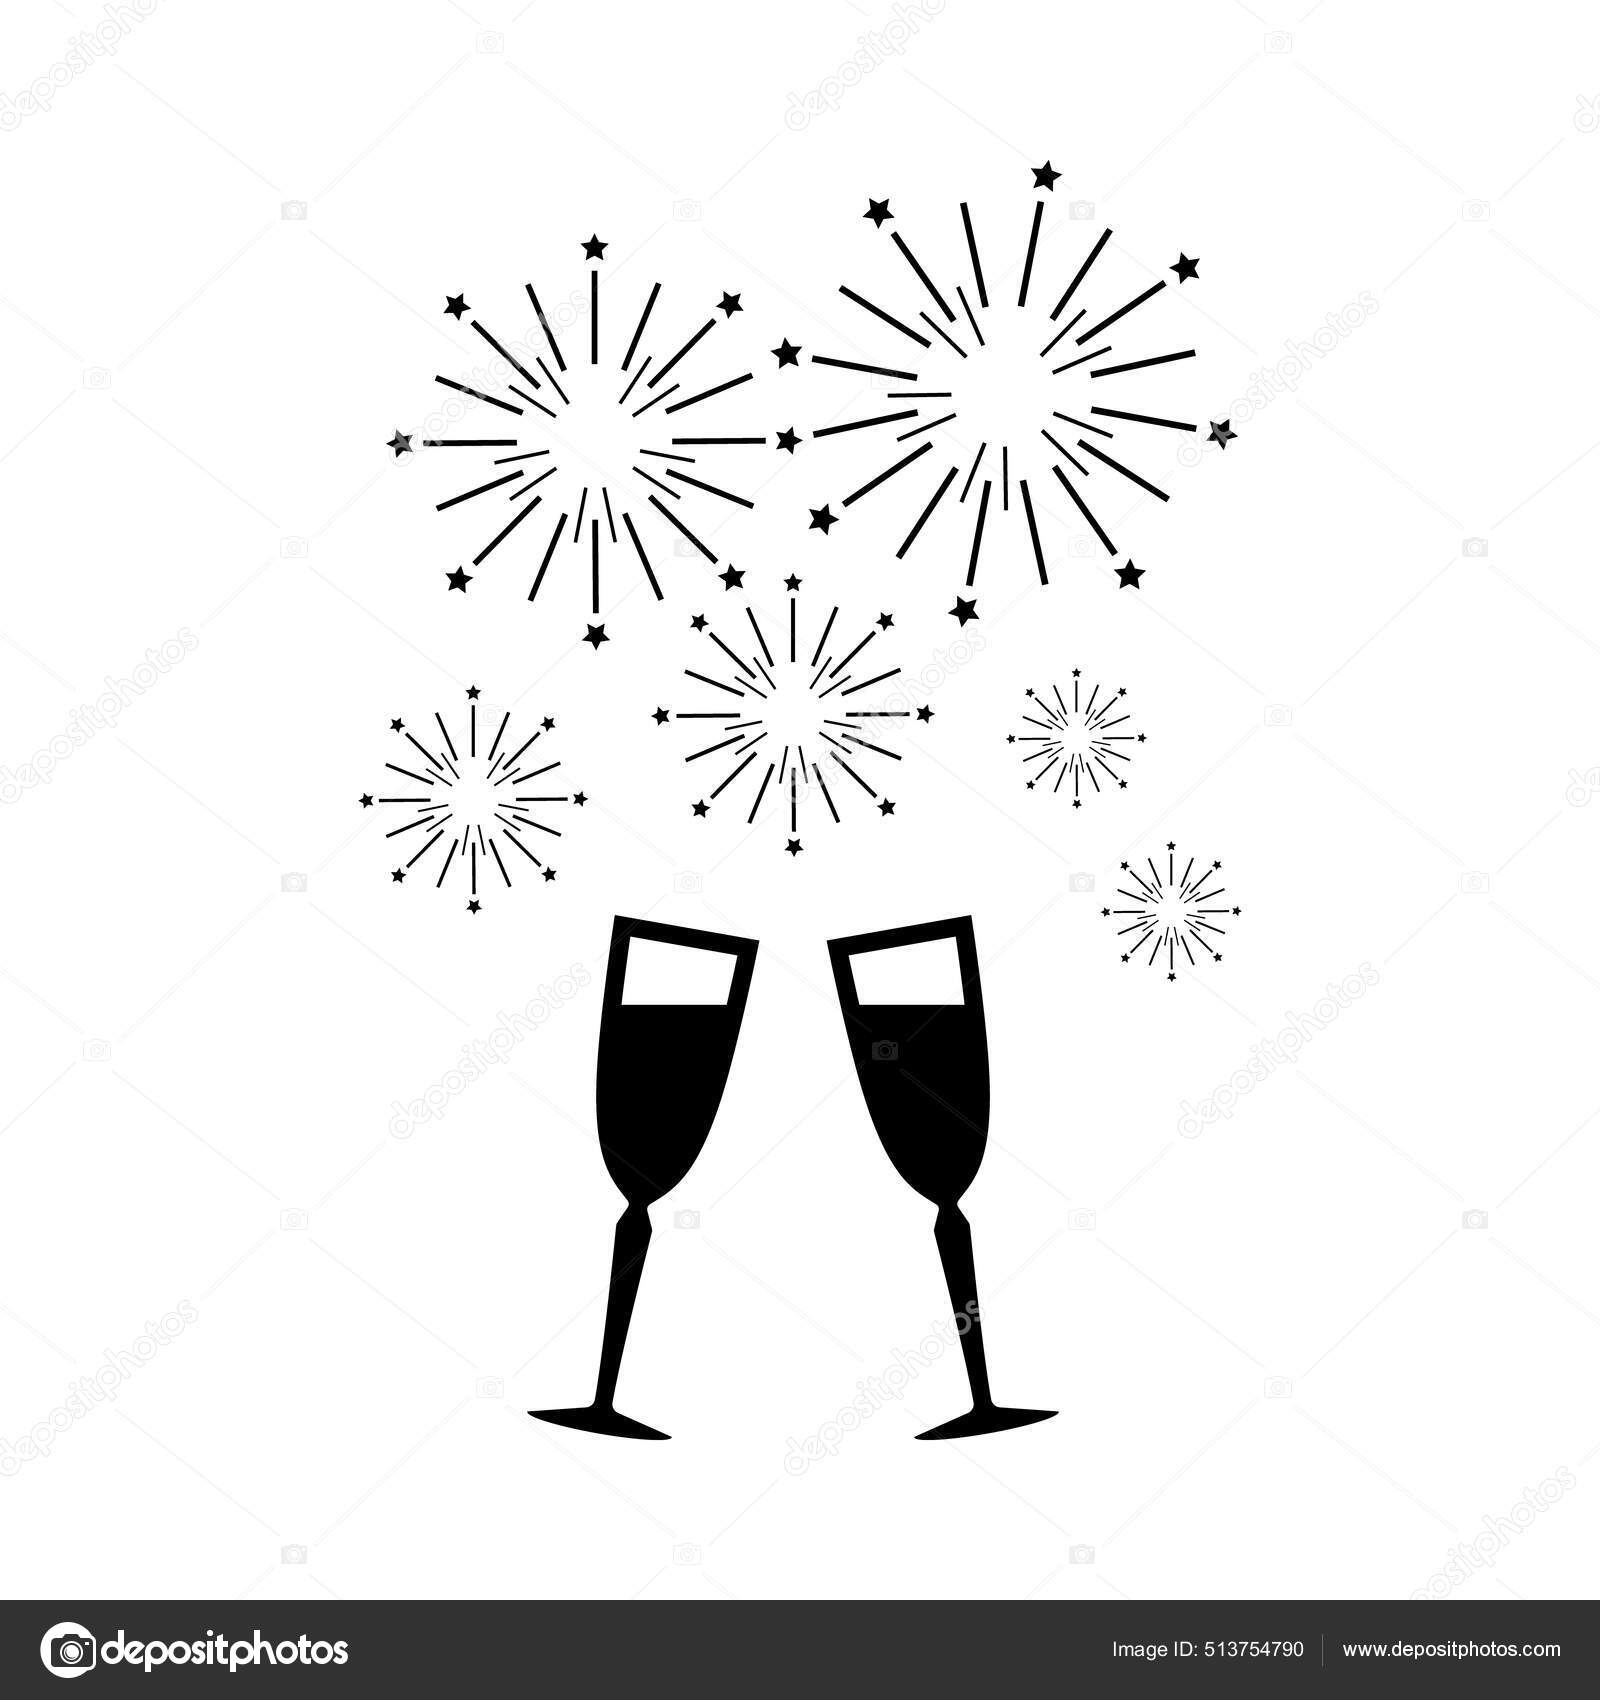 https://st.depositphotos.com/15297120/51375/v/1600/depositphotos_513754790-stock-illustration-two-crystal-champagne-glasses-toast.jpg